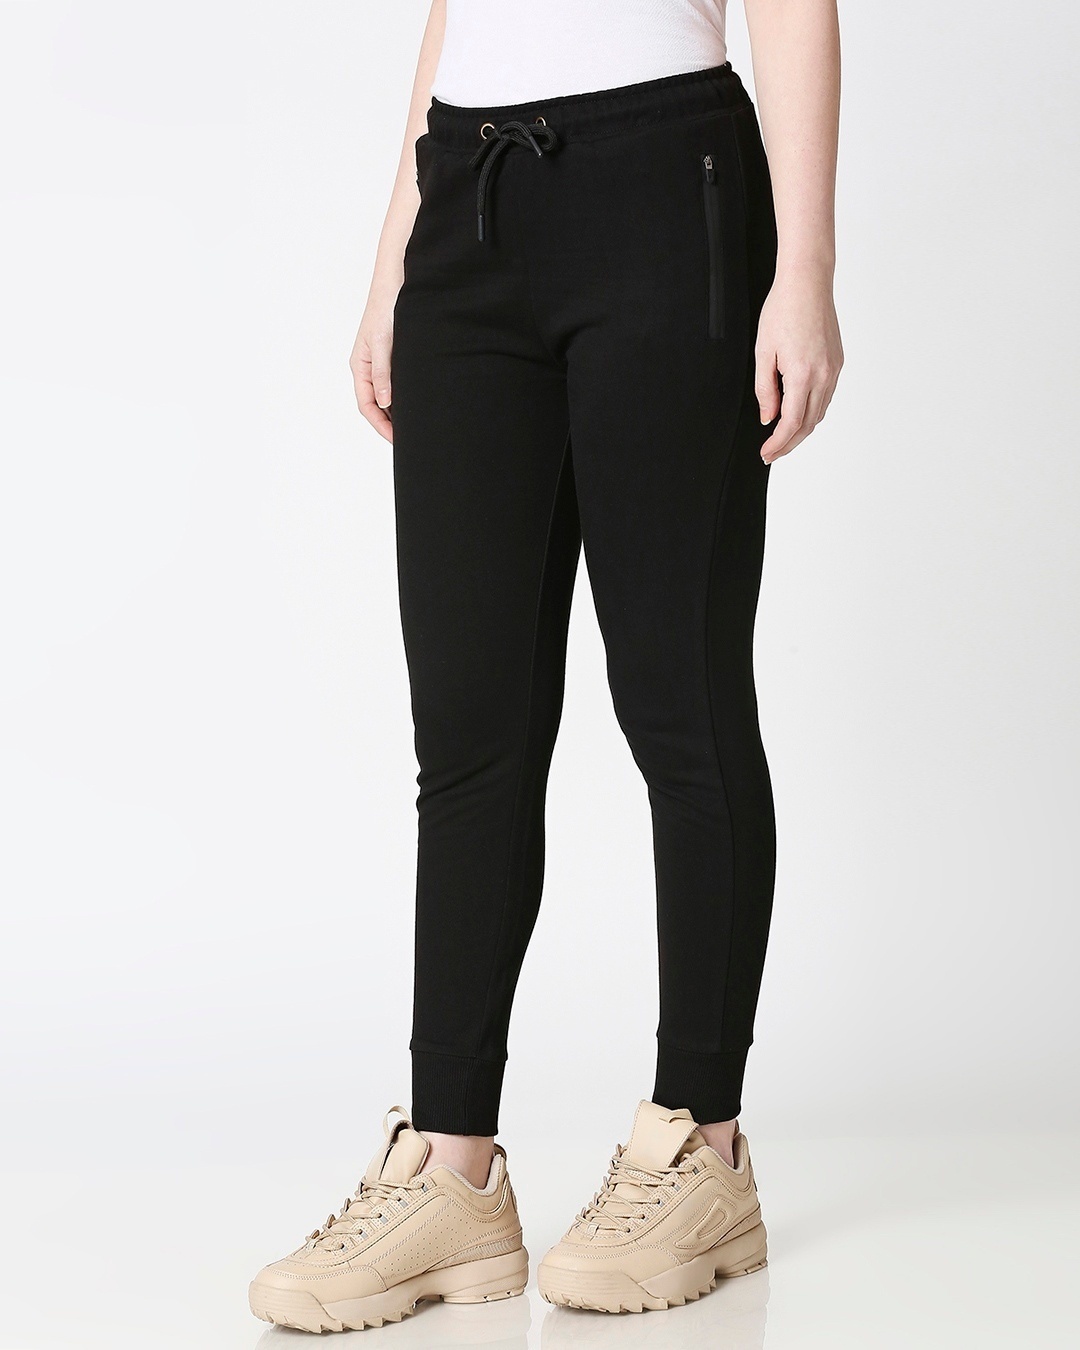 Shop Jet Black Jogger Pants With Zipper-Design